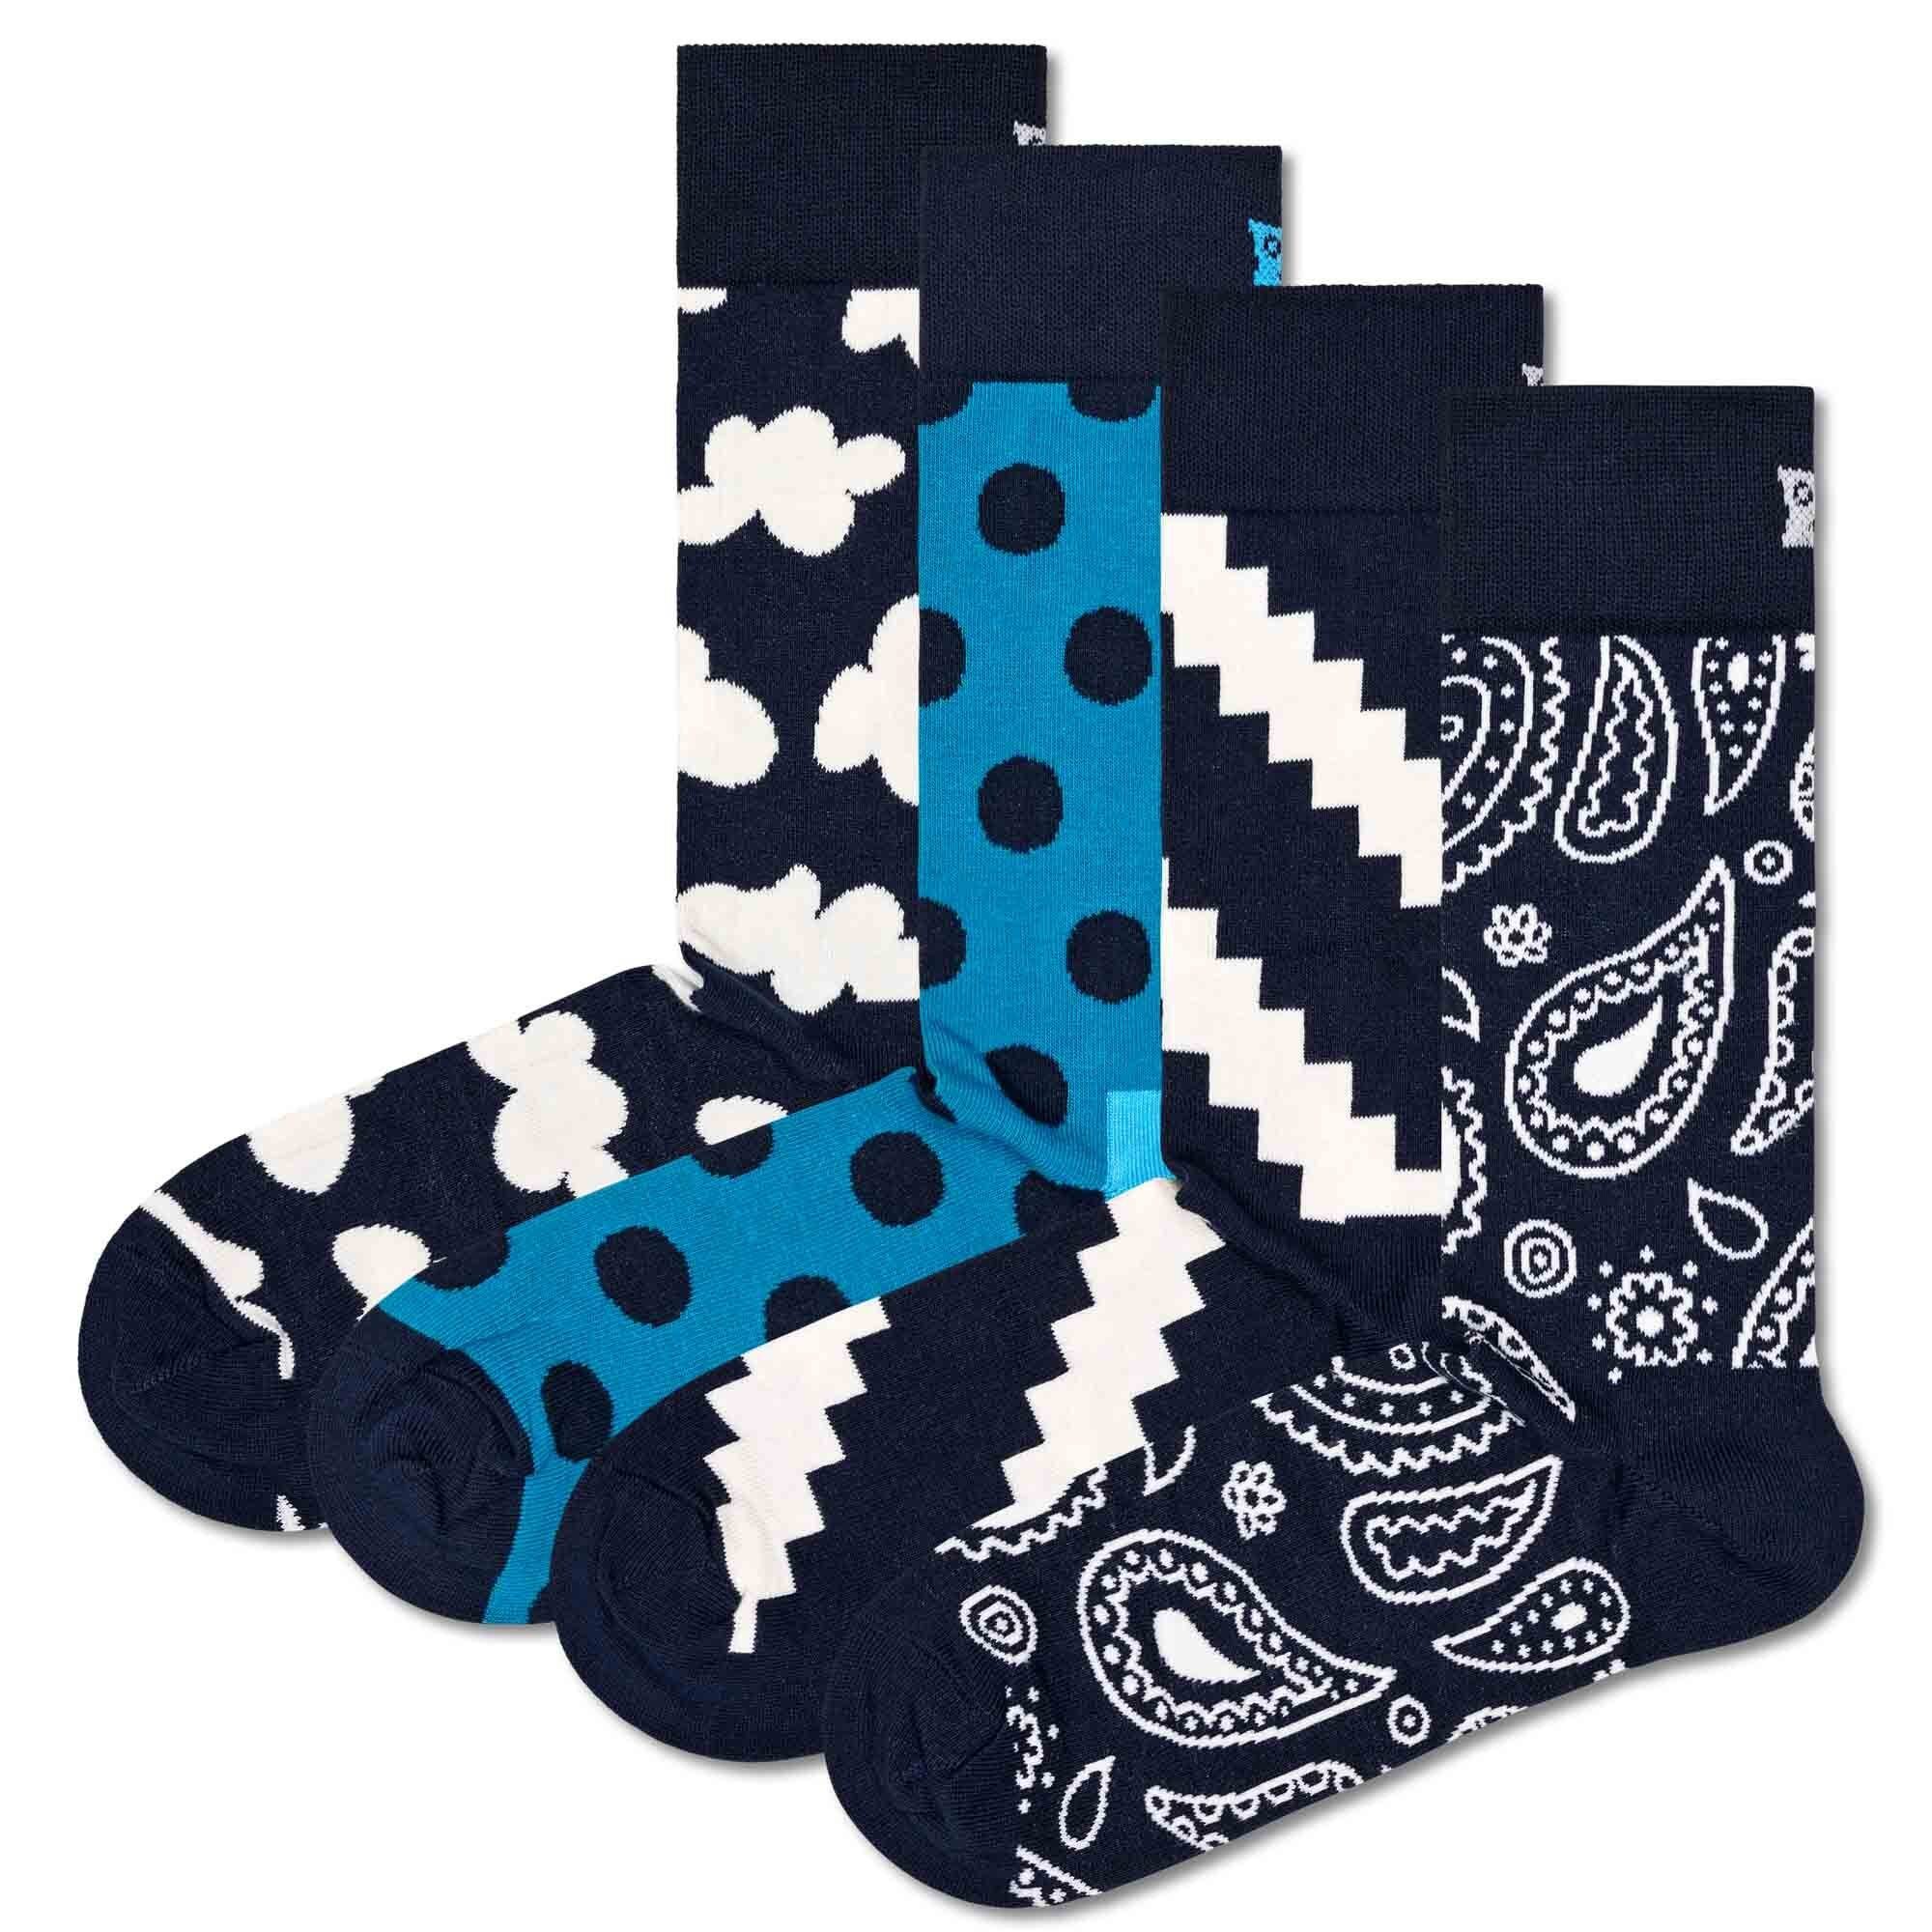 Socks Moody Happy Blues Kurzsocken Socken, 4er Geschenkbox Unisex Pack